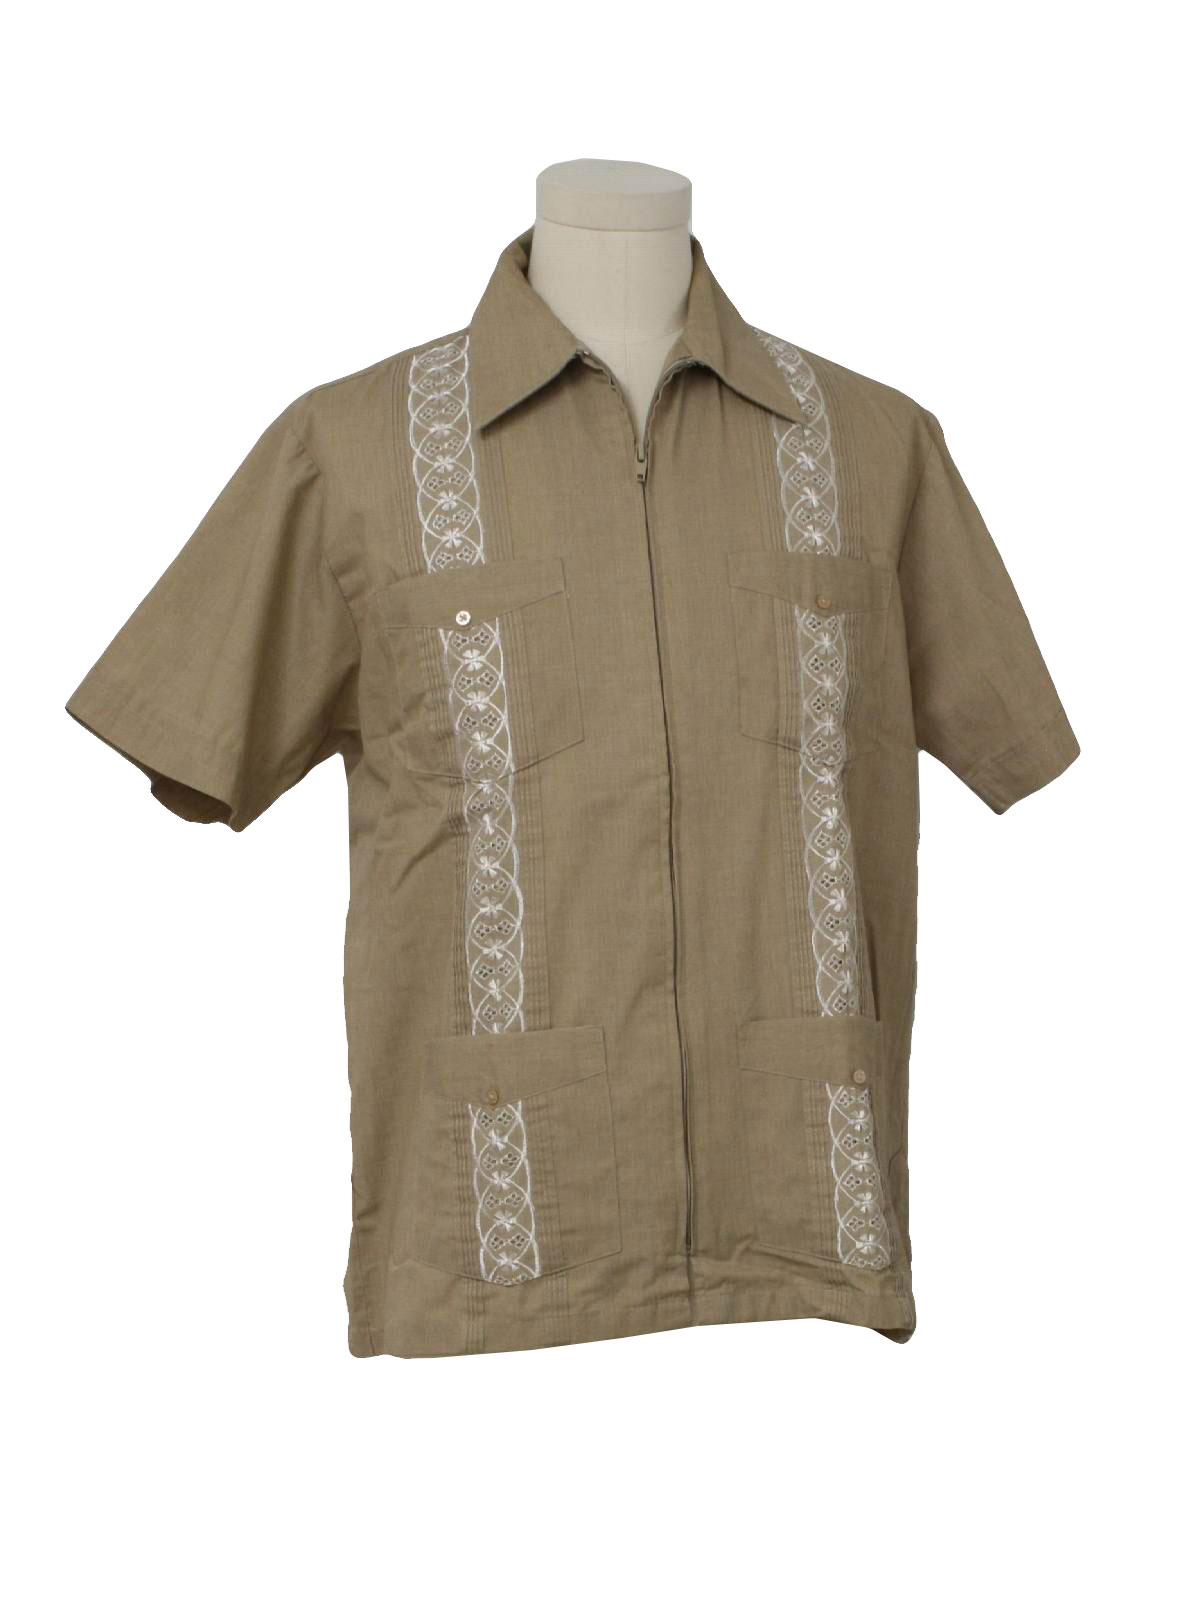 Vintage Haband 1980s Guayabera Shirt: 80s -Haband- Mens taupe and white ...